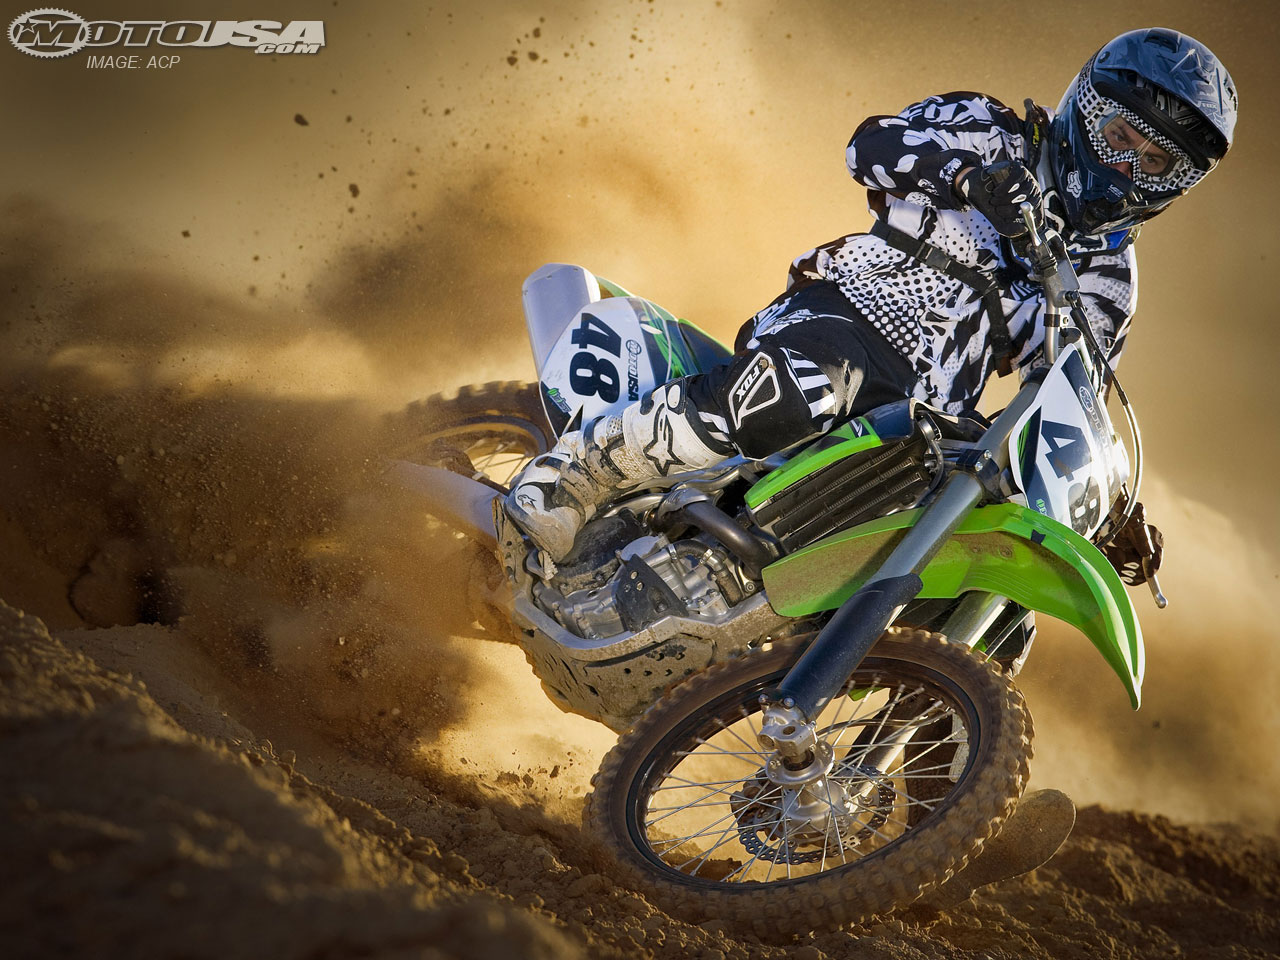 Download full size Motocross wallpaper / Sports / 1280x960